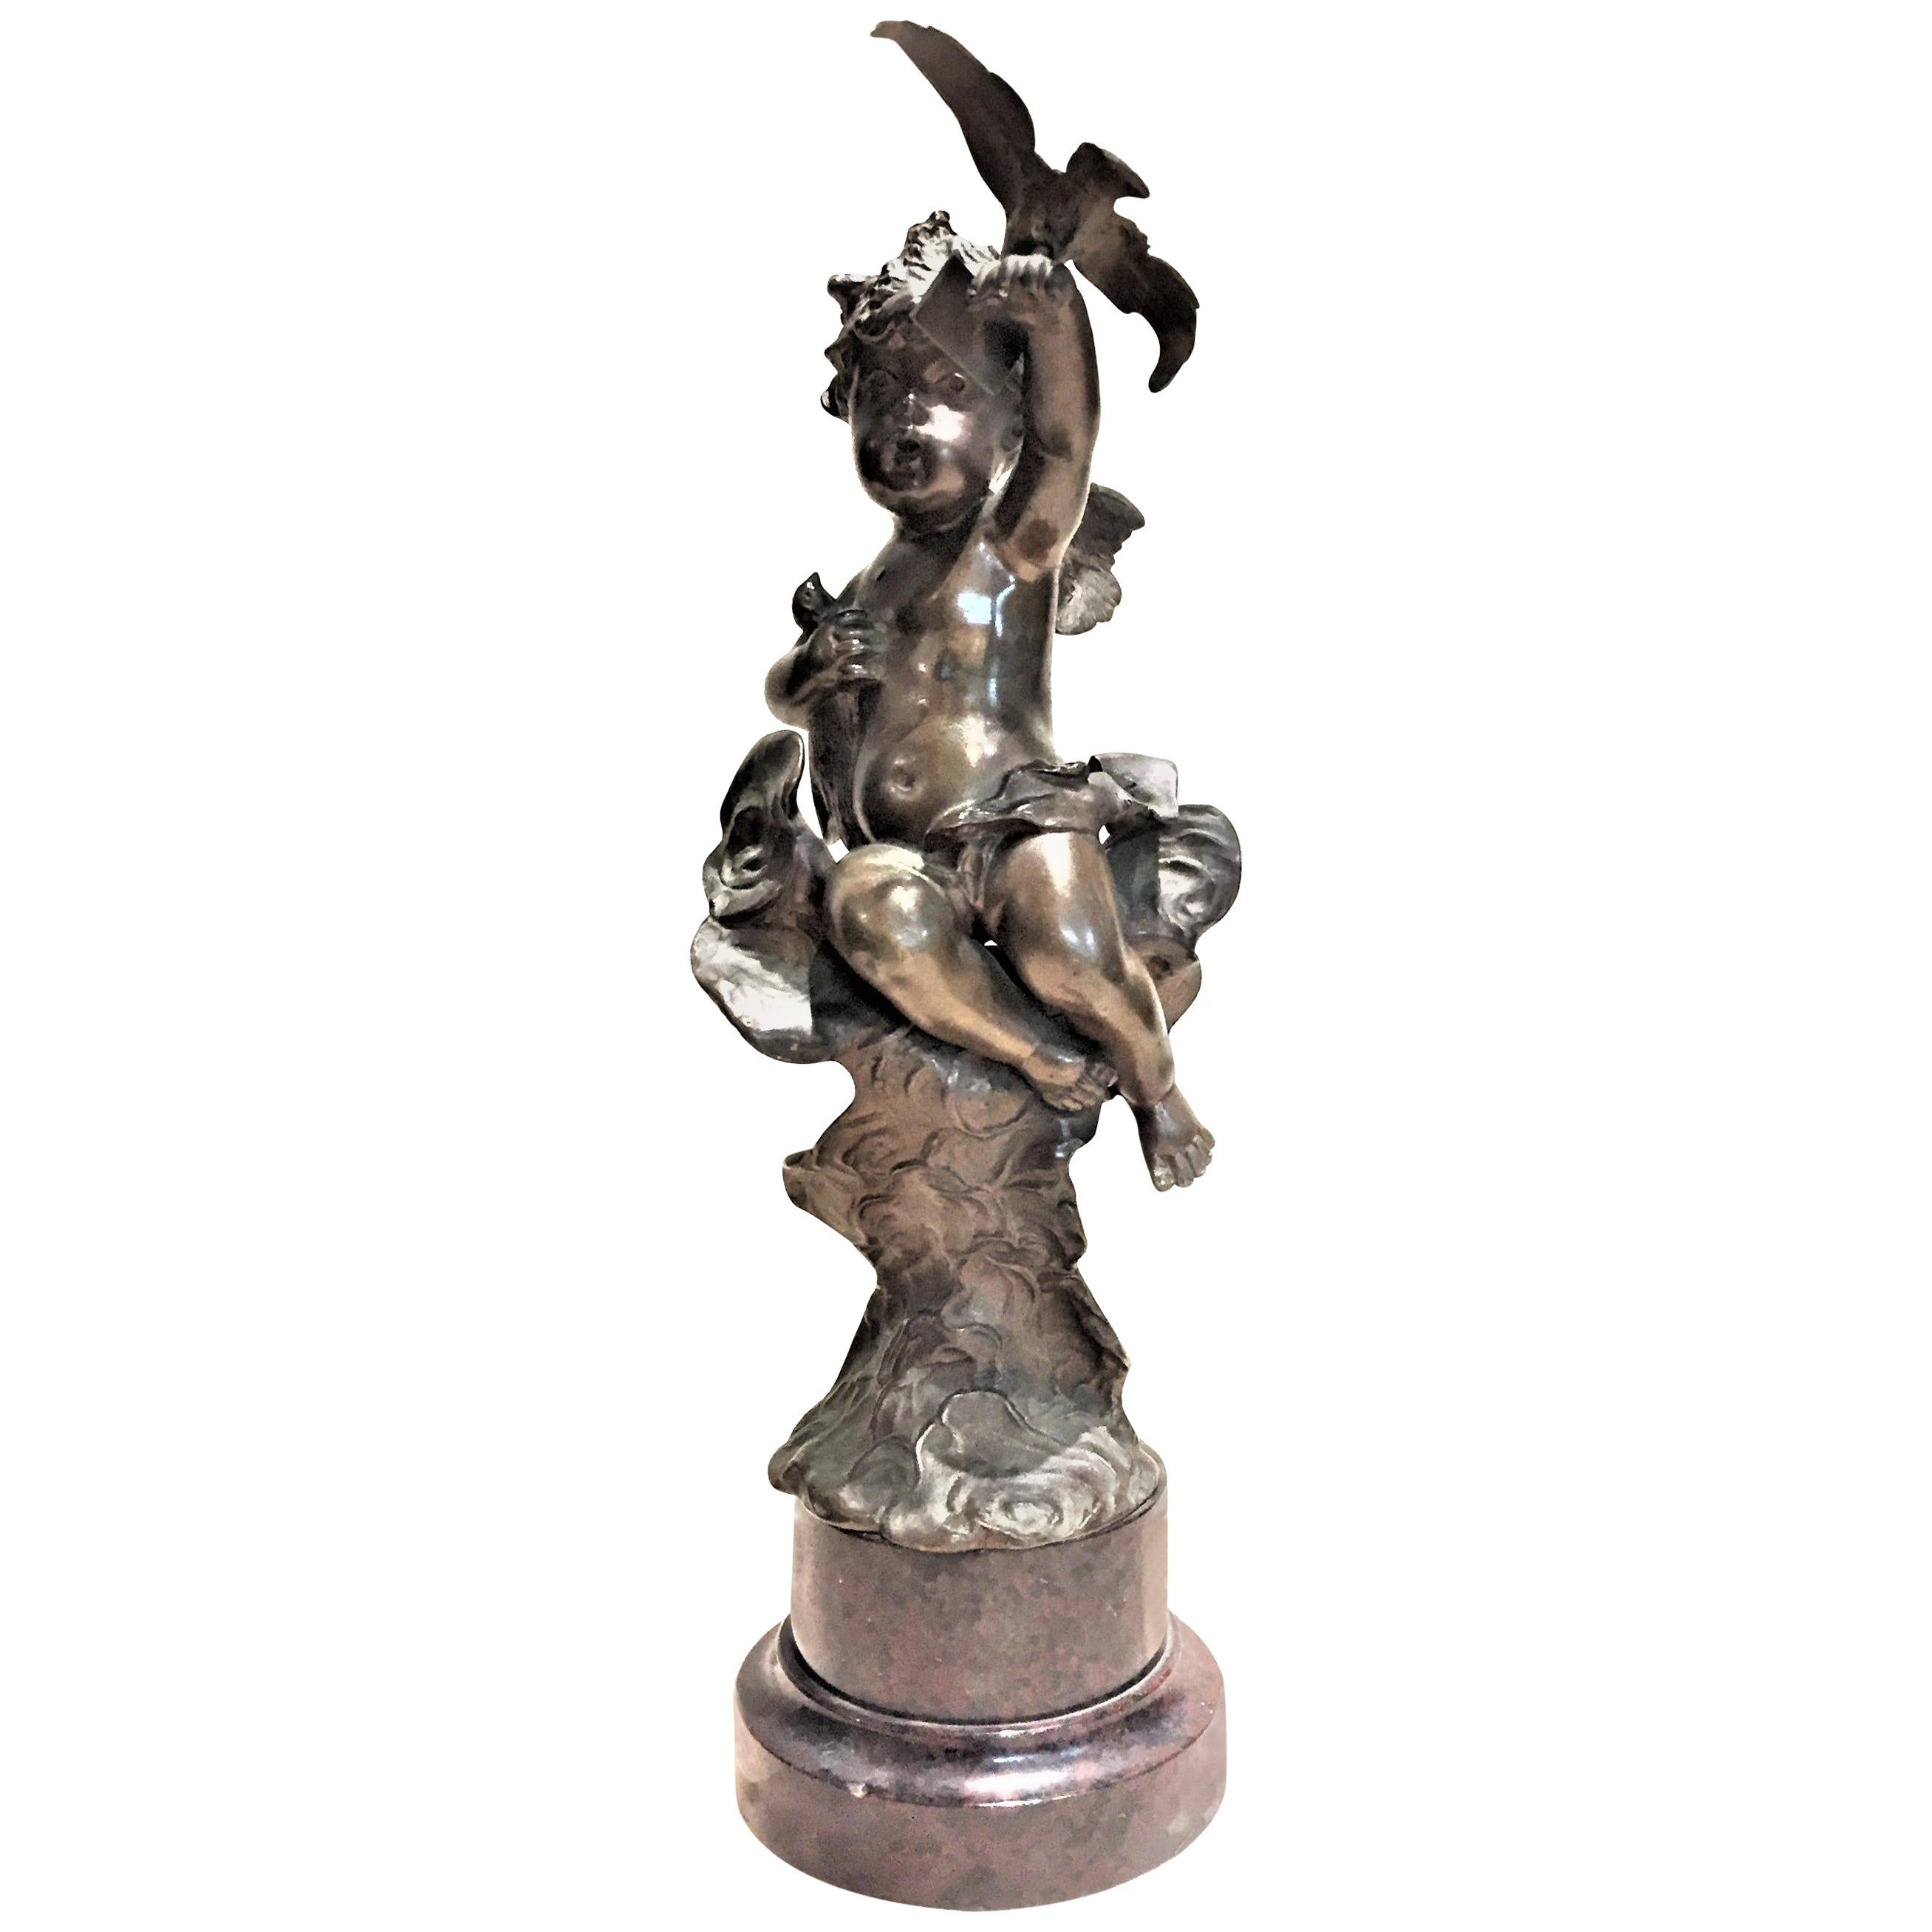 French Belle Époque, Patinated Bronze Desktop Sculptural Paperweight, 19 Century